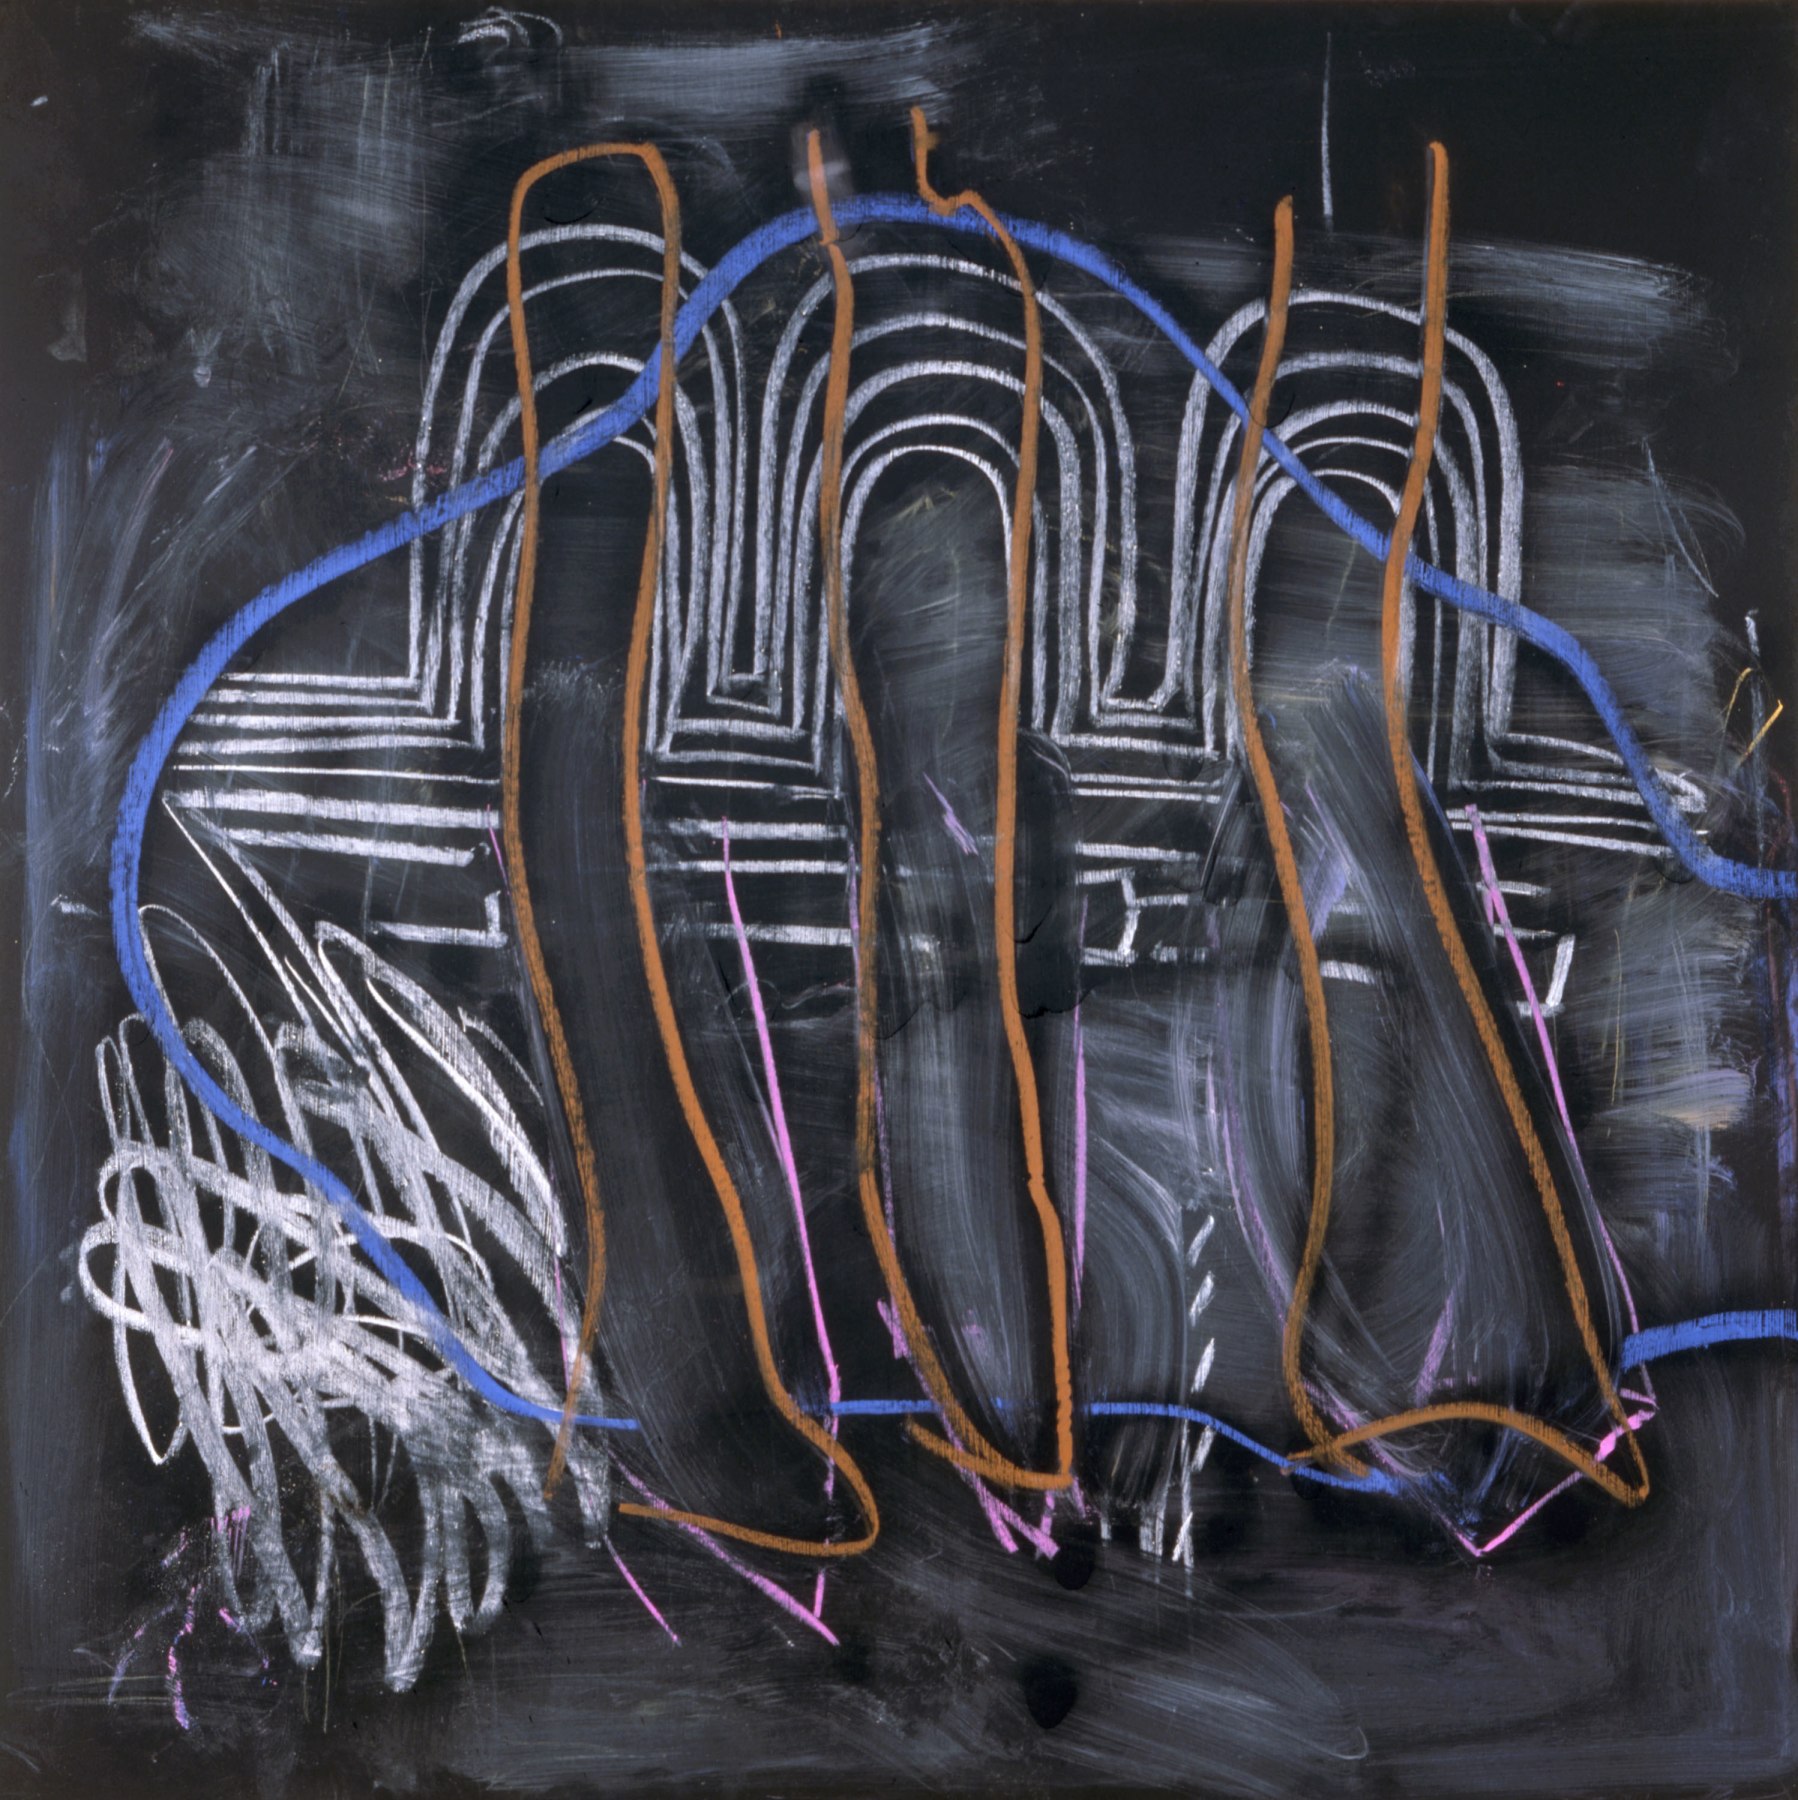 Per Kirkeby

&amp;ldquo;Untitled&amp;rdquo;, 1985

Chalk, blackboard paint on masonite

48 x 48 inches

122 x 122 cm

PK 404

$175,000